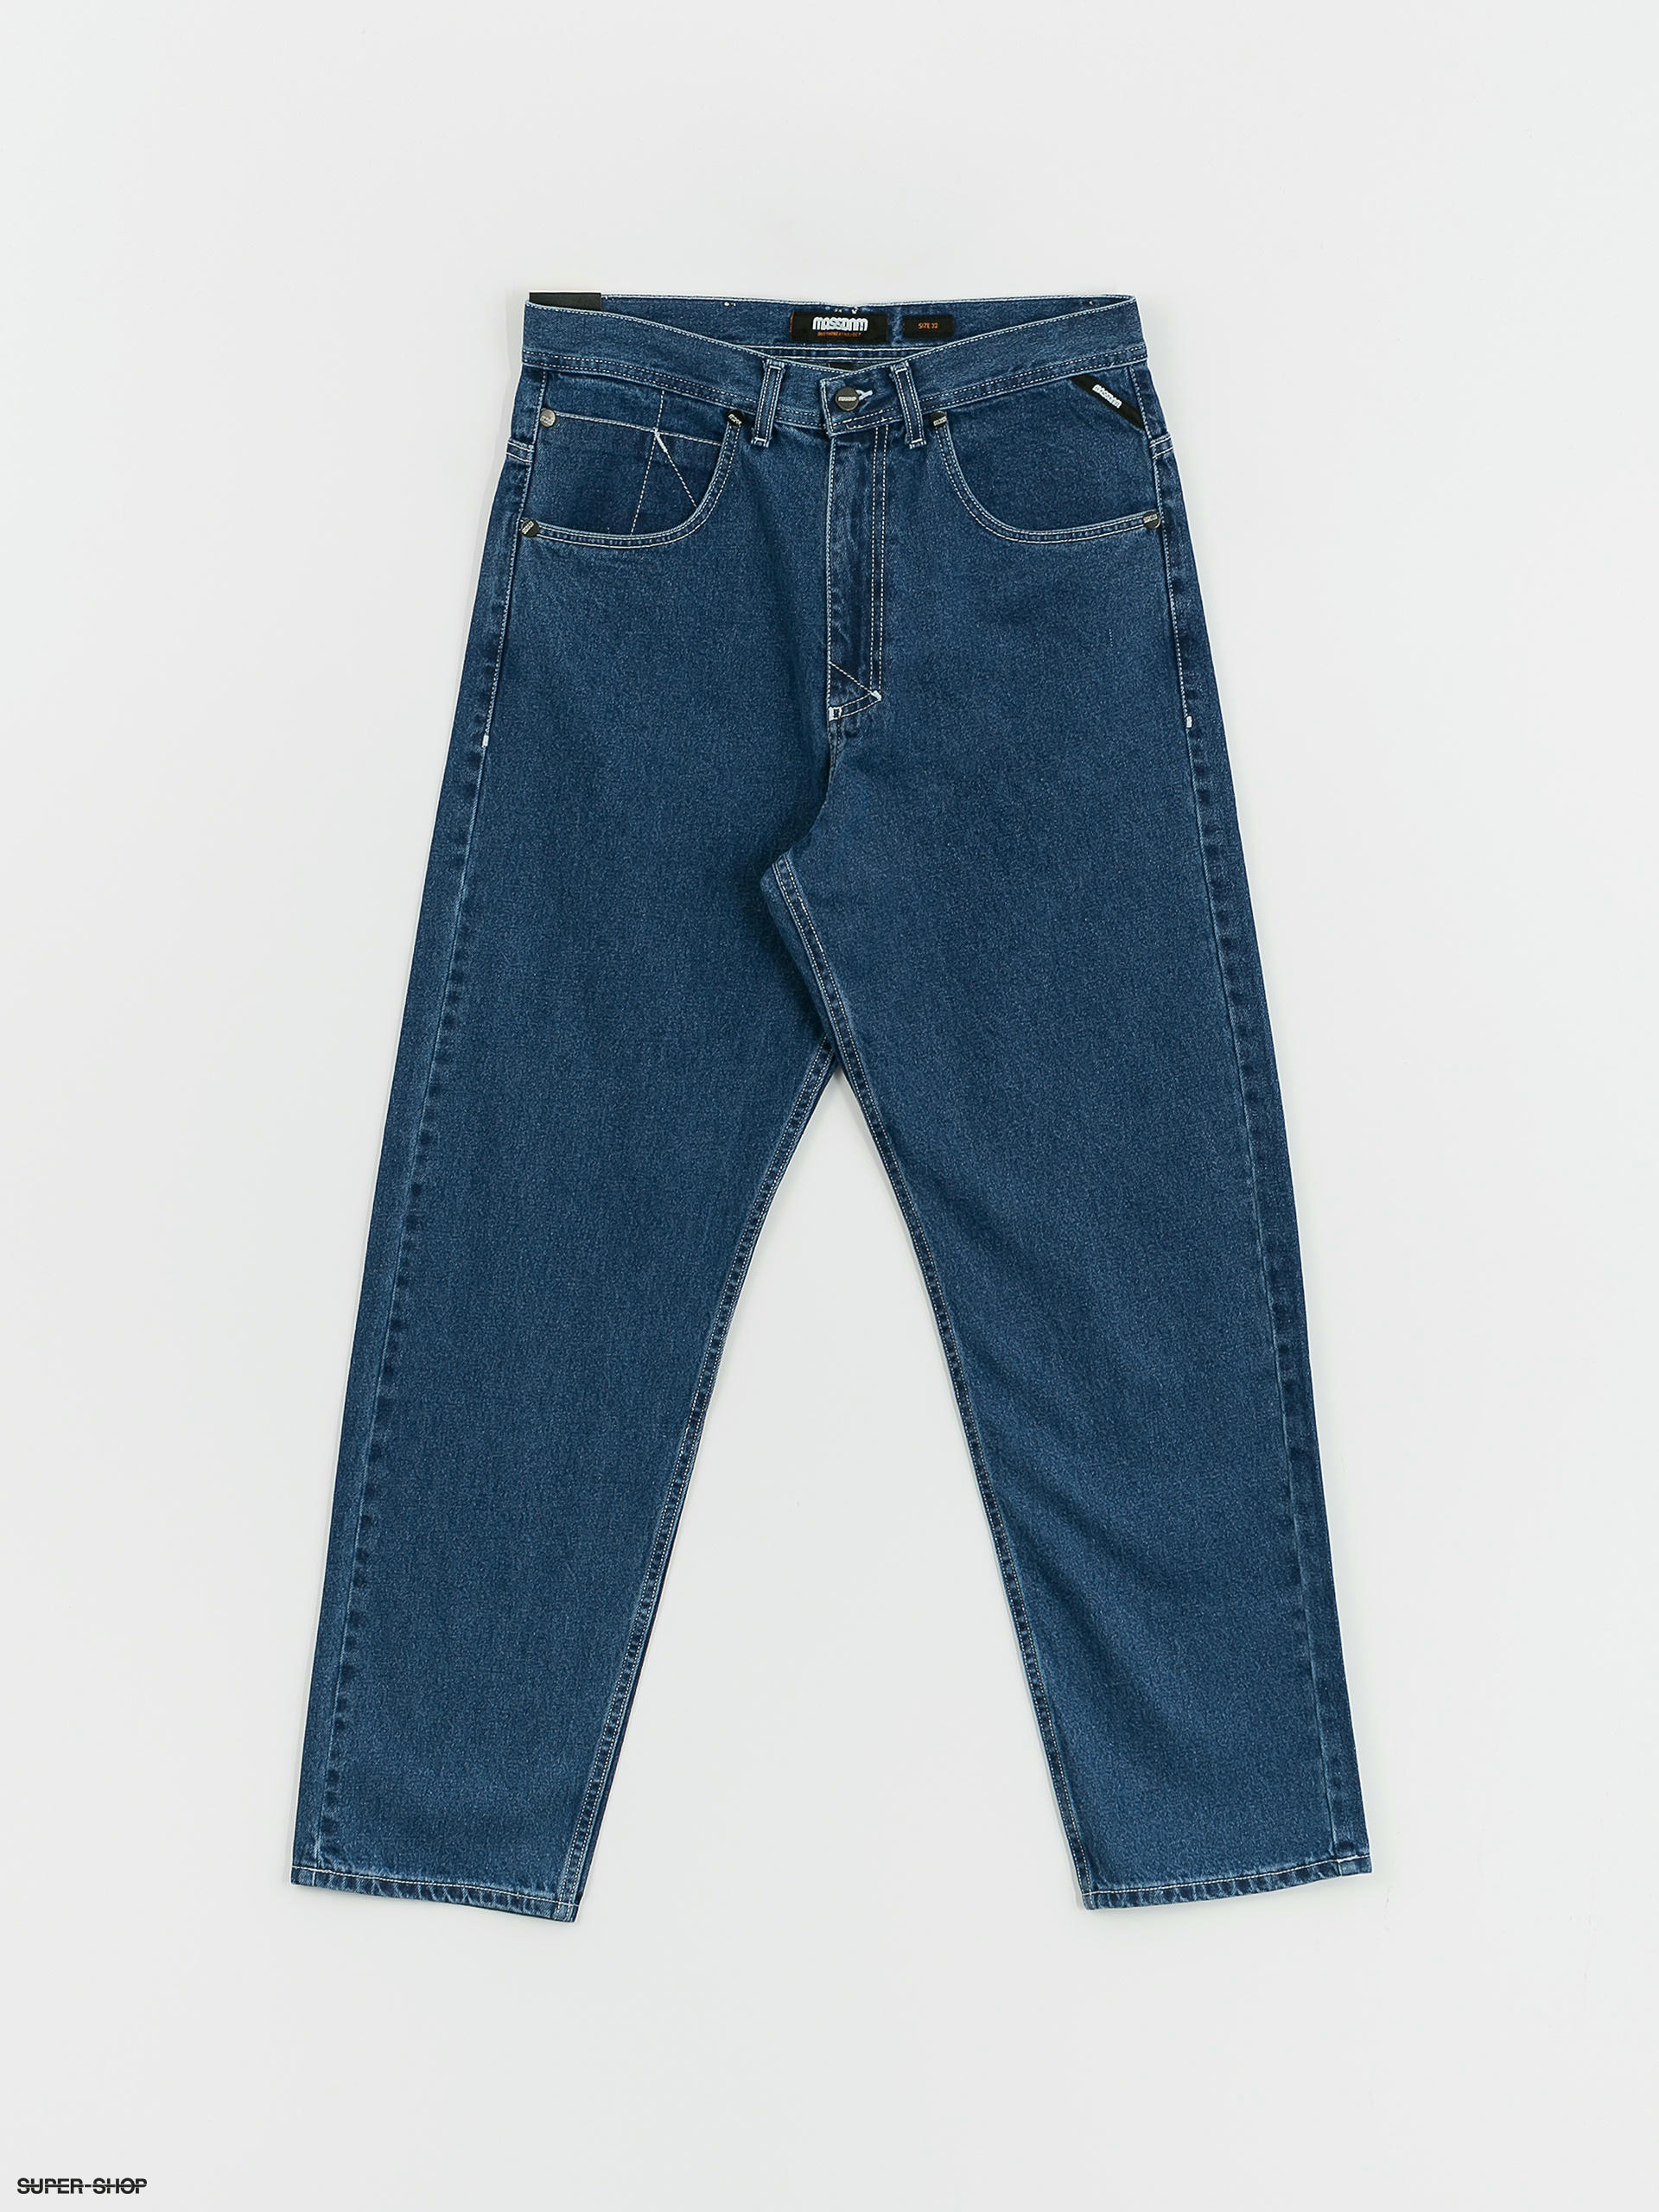 TRUE CRAFT Jeans Men 34x29 Blue Light Wash Relaxed Bootcut Denim Pant Tag  34x30 | eBay